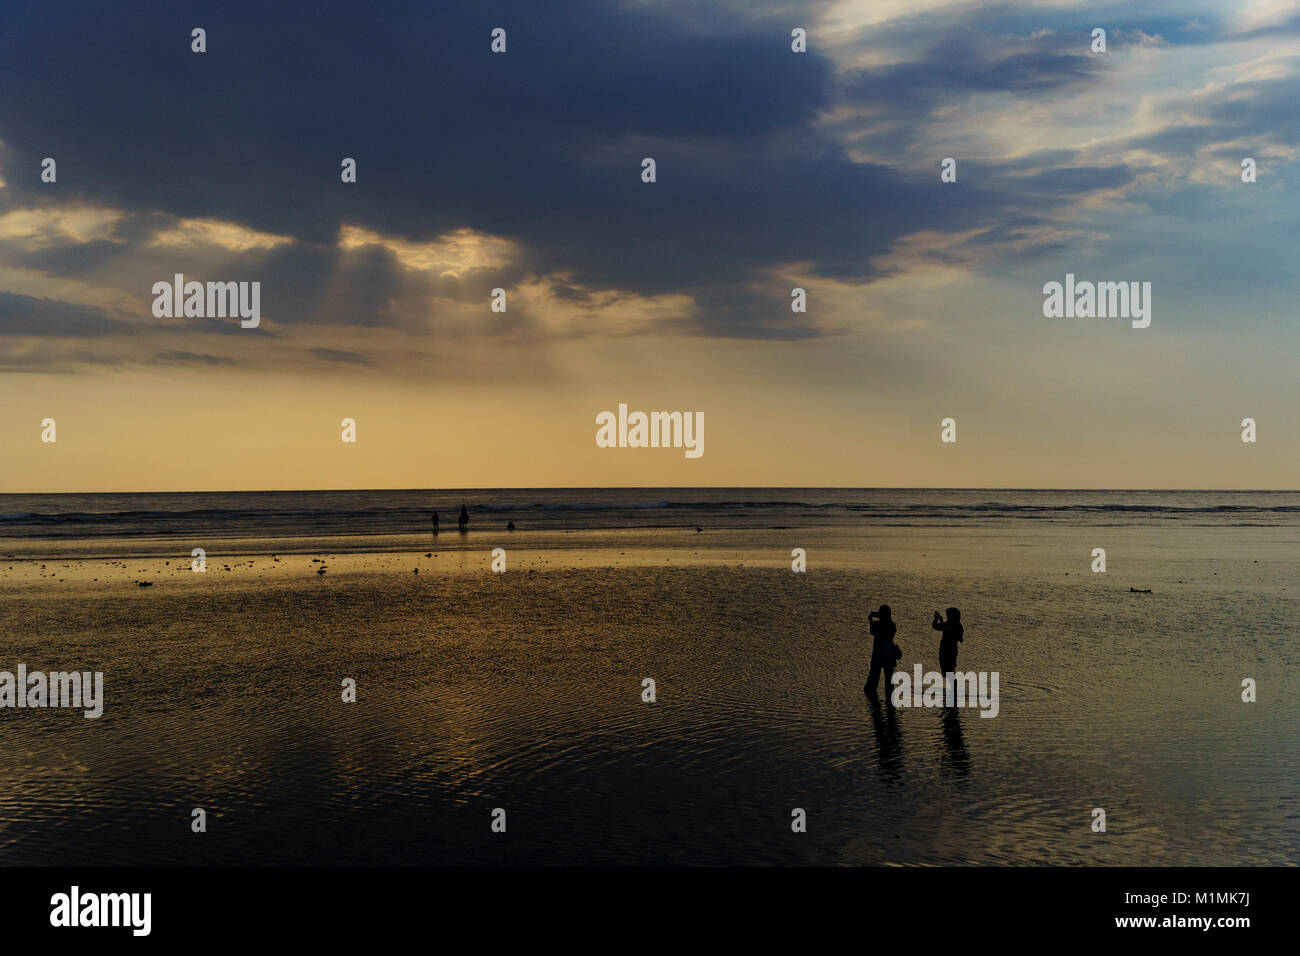 Silhouette of two people on beach, Gili Trawangan, Lombok Utara, West Nusa Tenggara, Indonesia Stock Photo